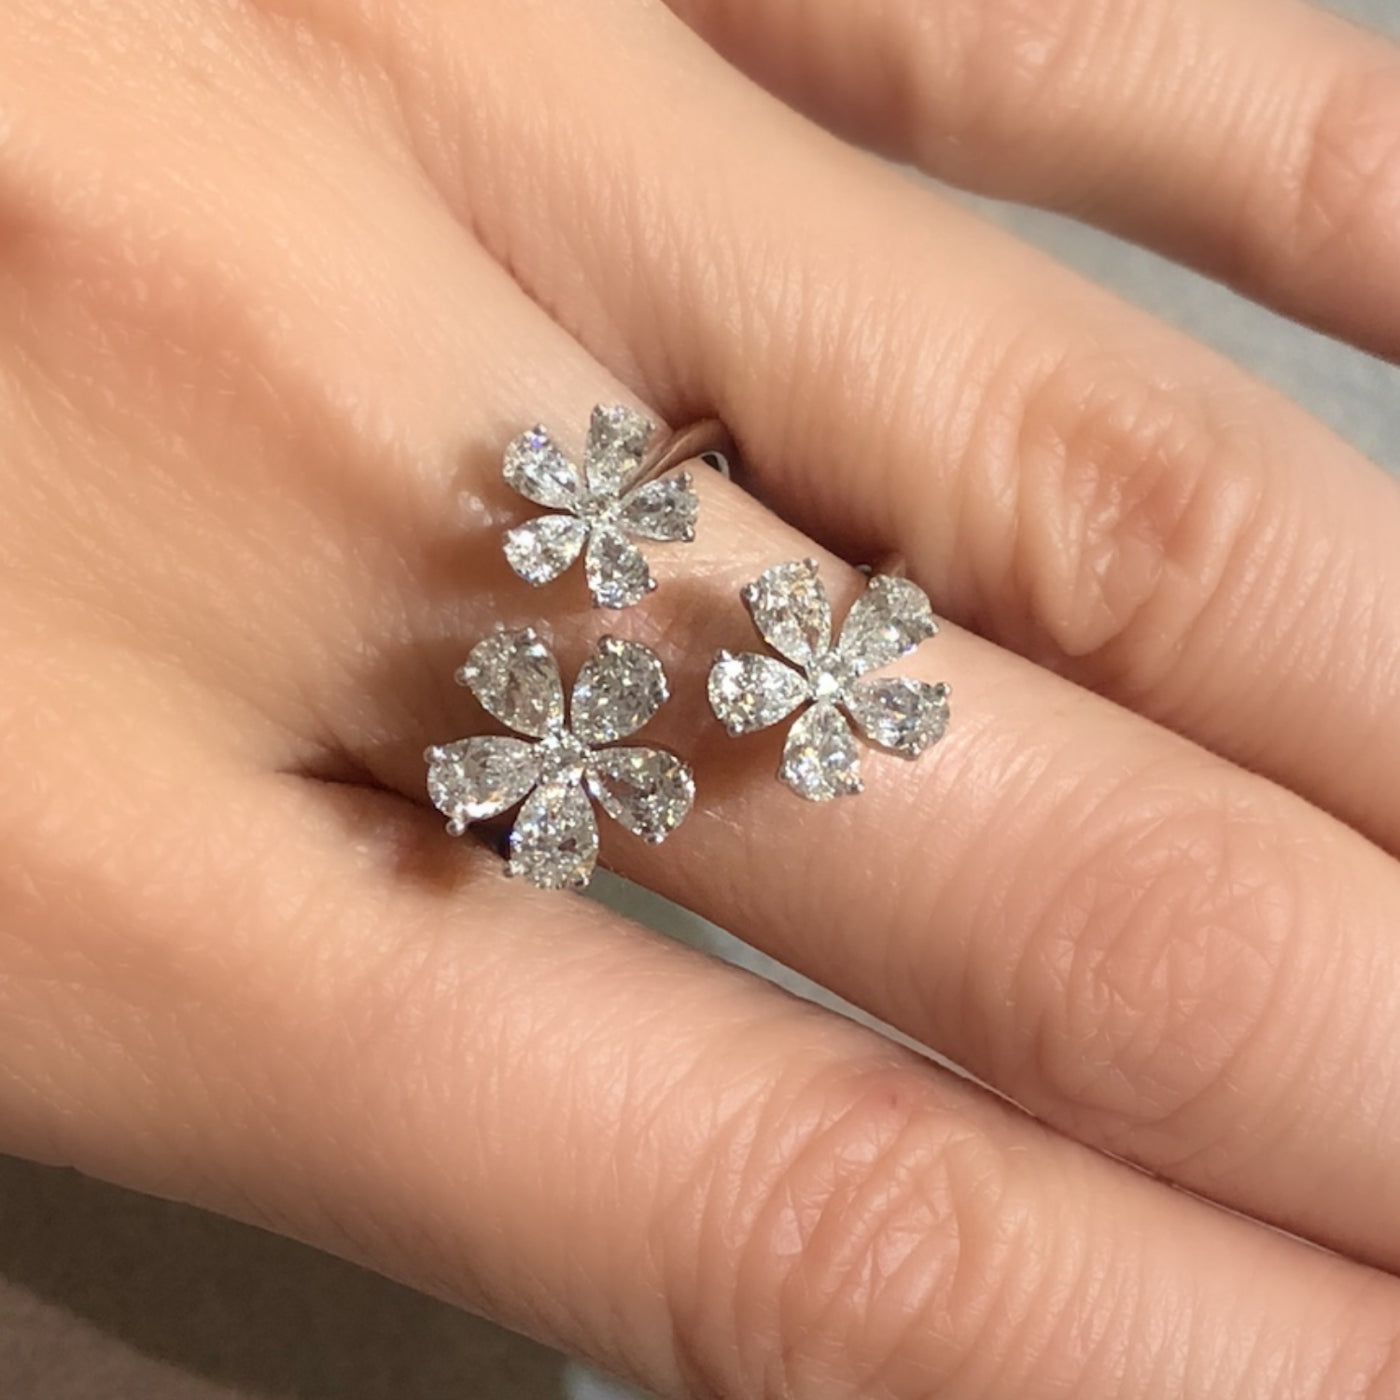 Leah Diamond Ring